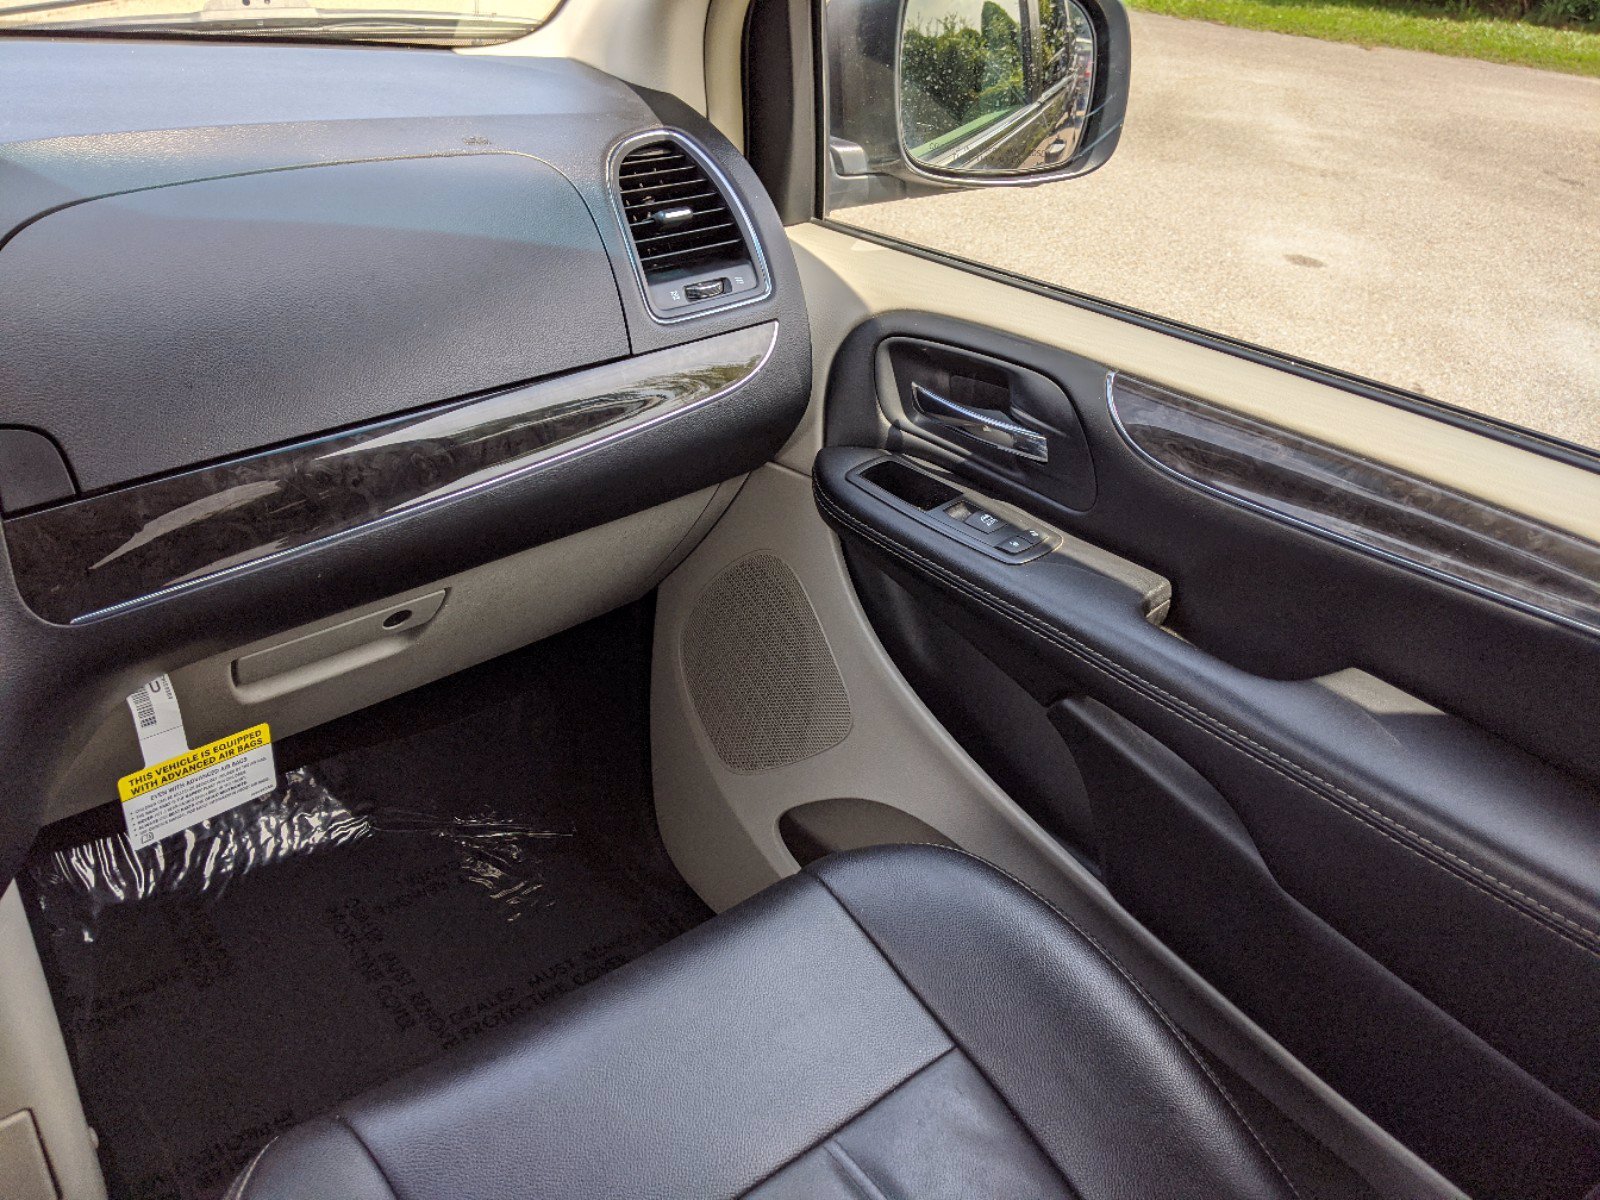 PreOwned 2015 Chrysler Town & Country Touring Minivan